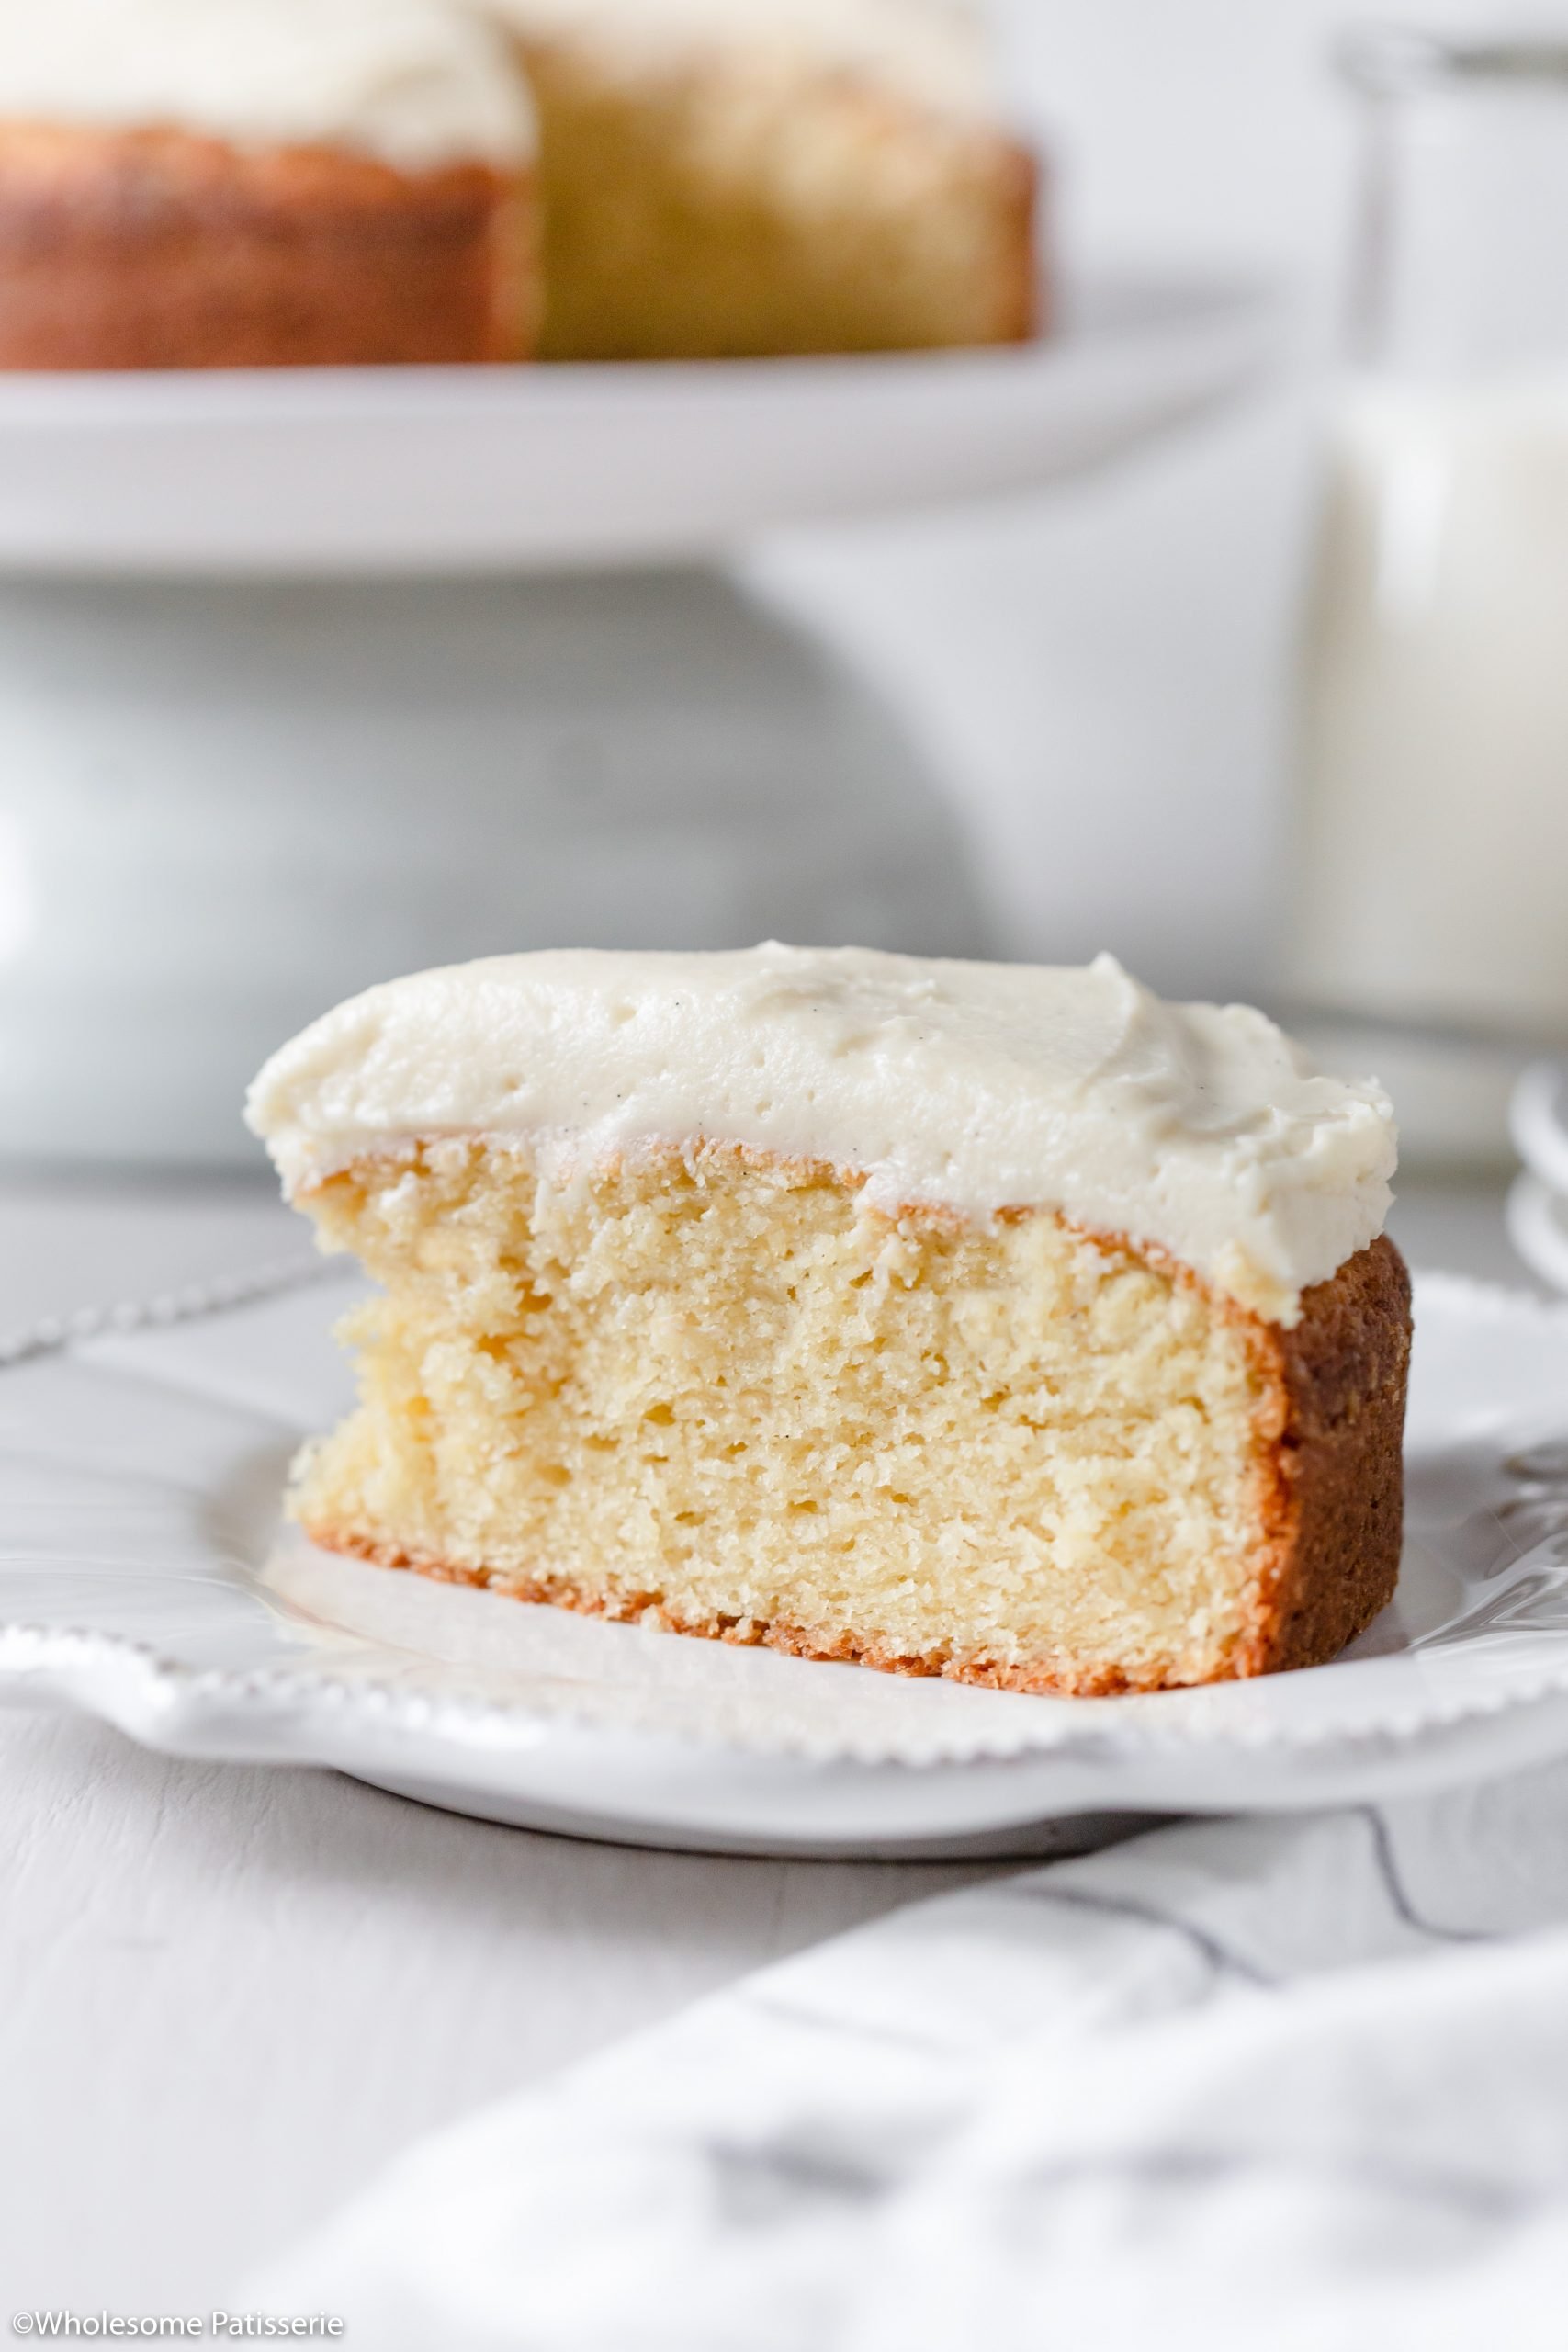 15 No-Fuss Single Layer Cake Recipes | Bake or Break